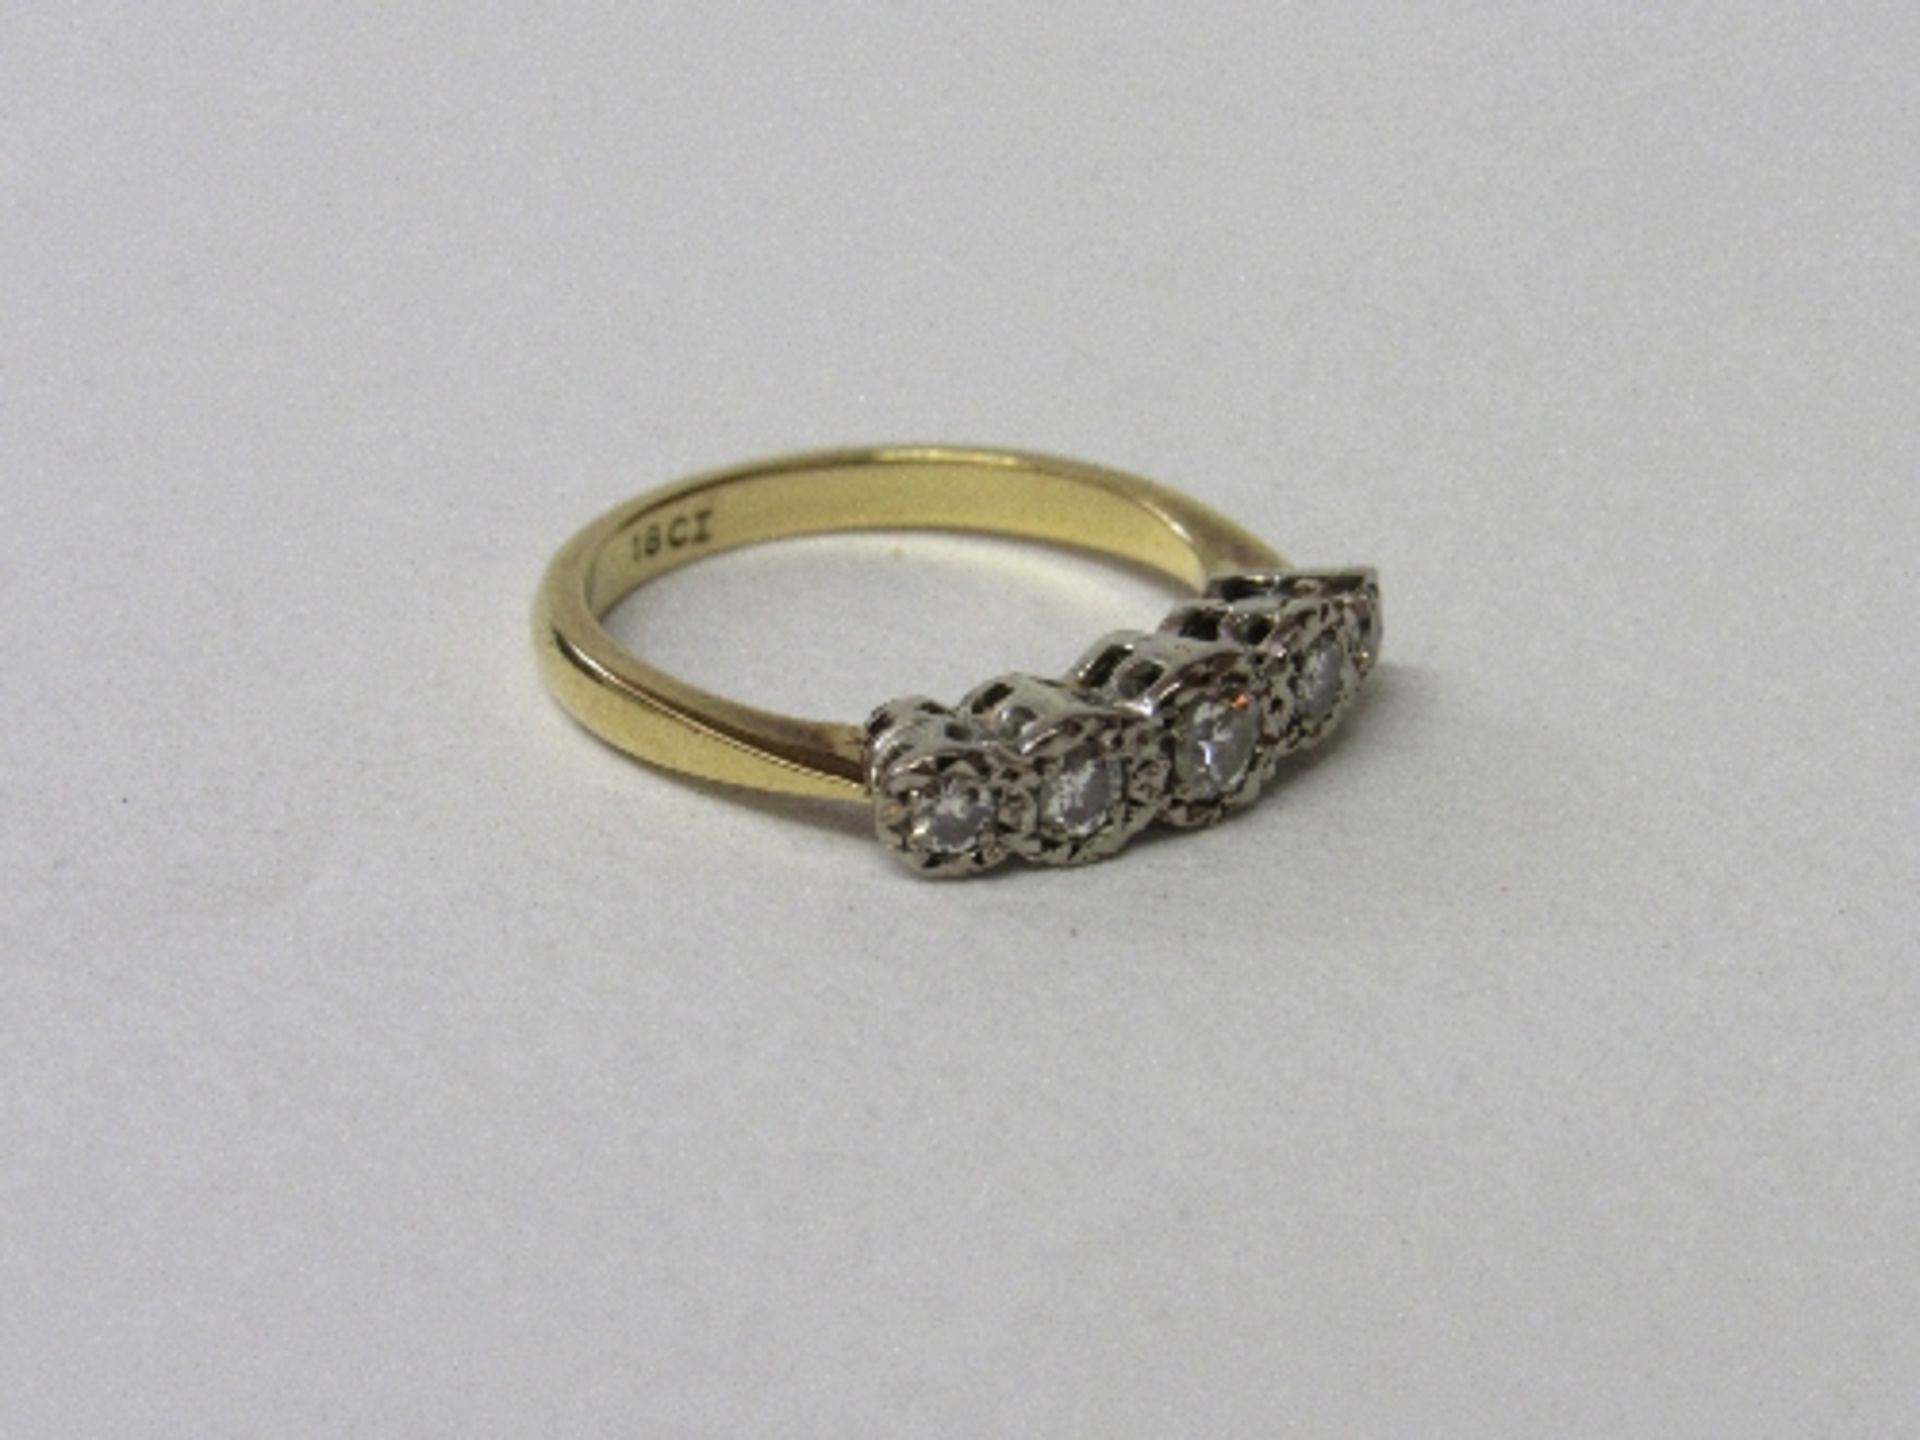 18ct gold 5 stone diamond ring, size L, wt 3.6gms. Estimate £180-200.